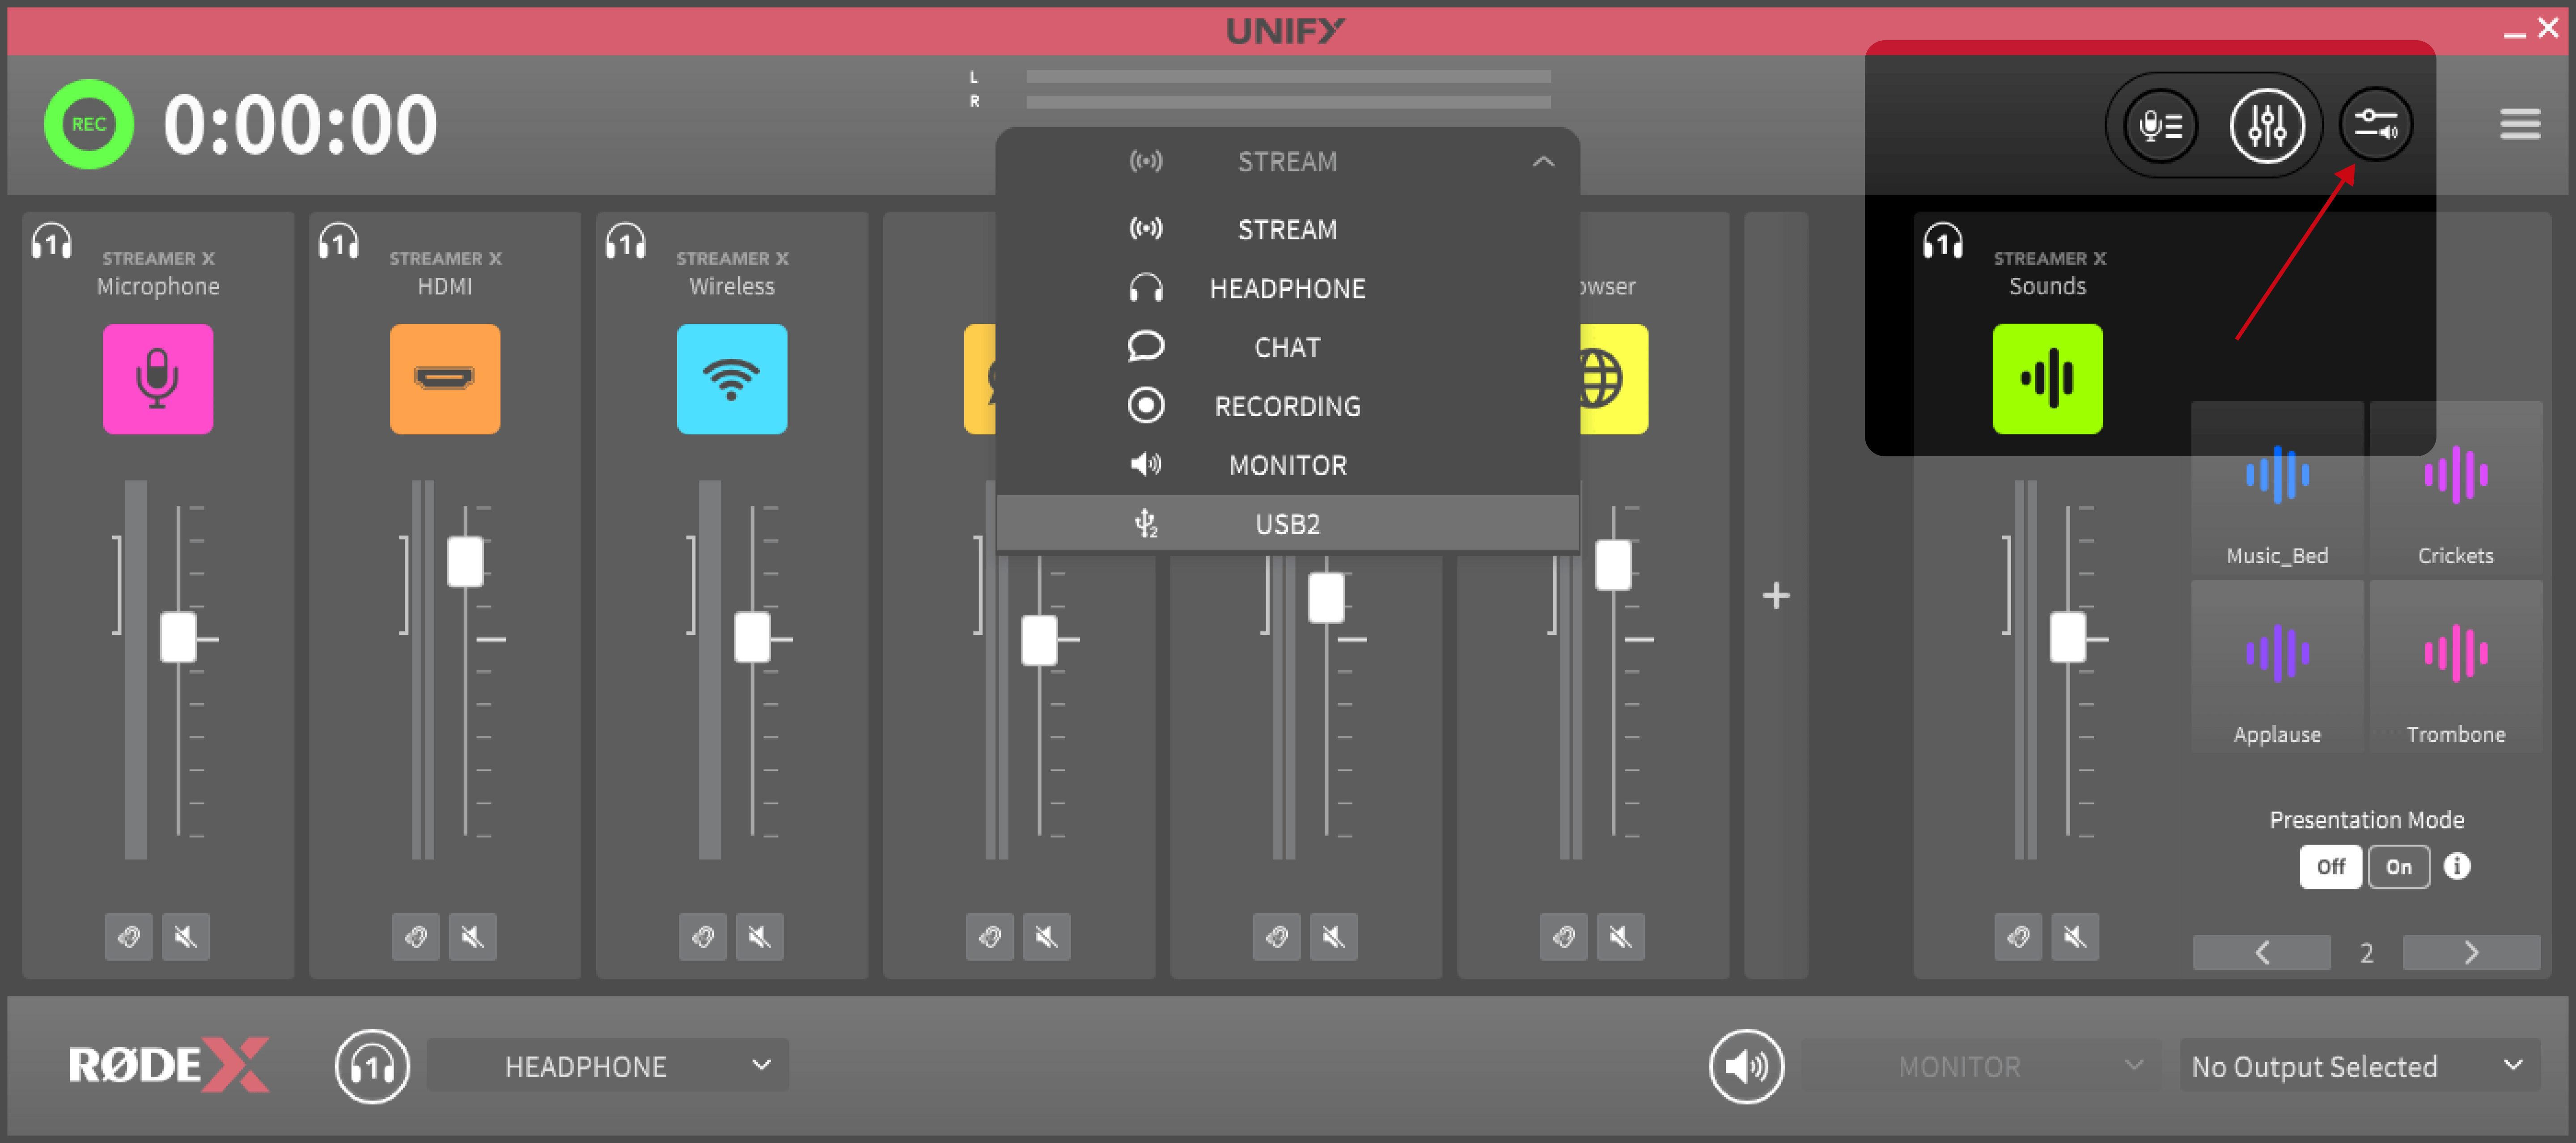 UNIFY sound mixer